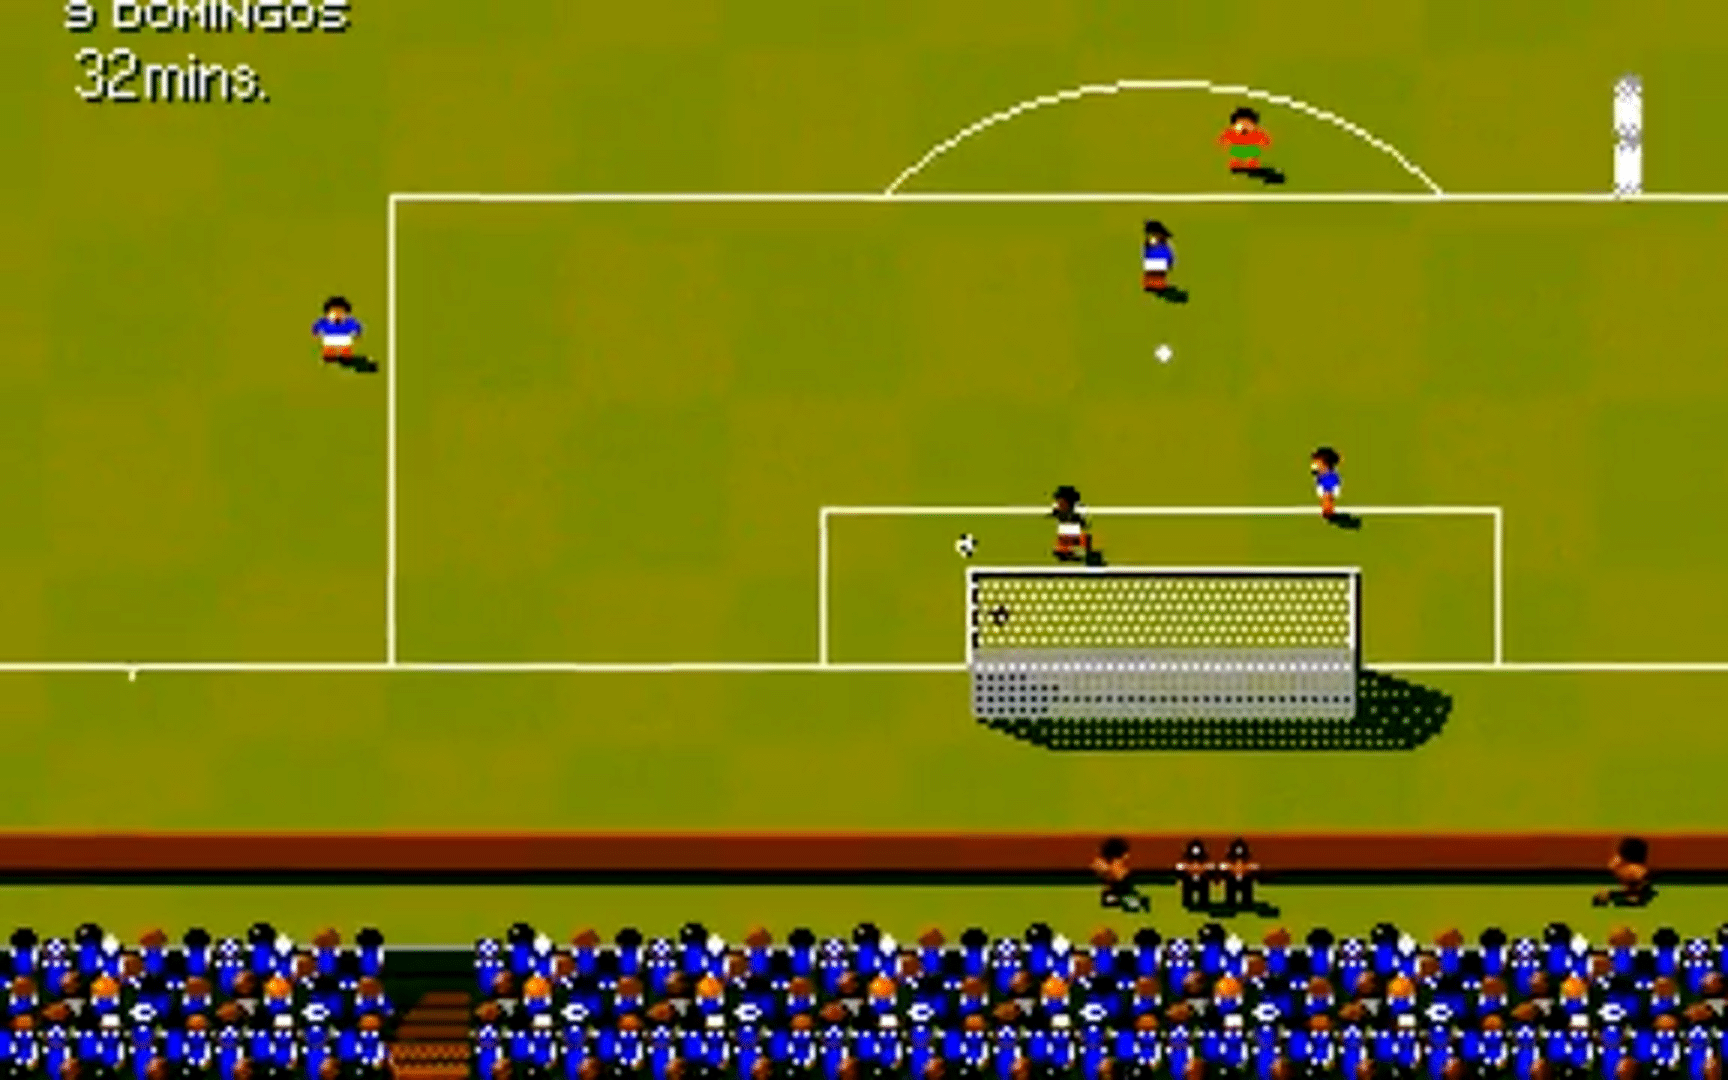 Sensible World of Soccer: European Championship Edition screenshot